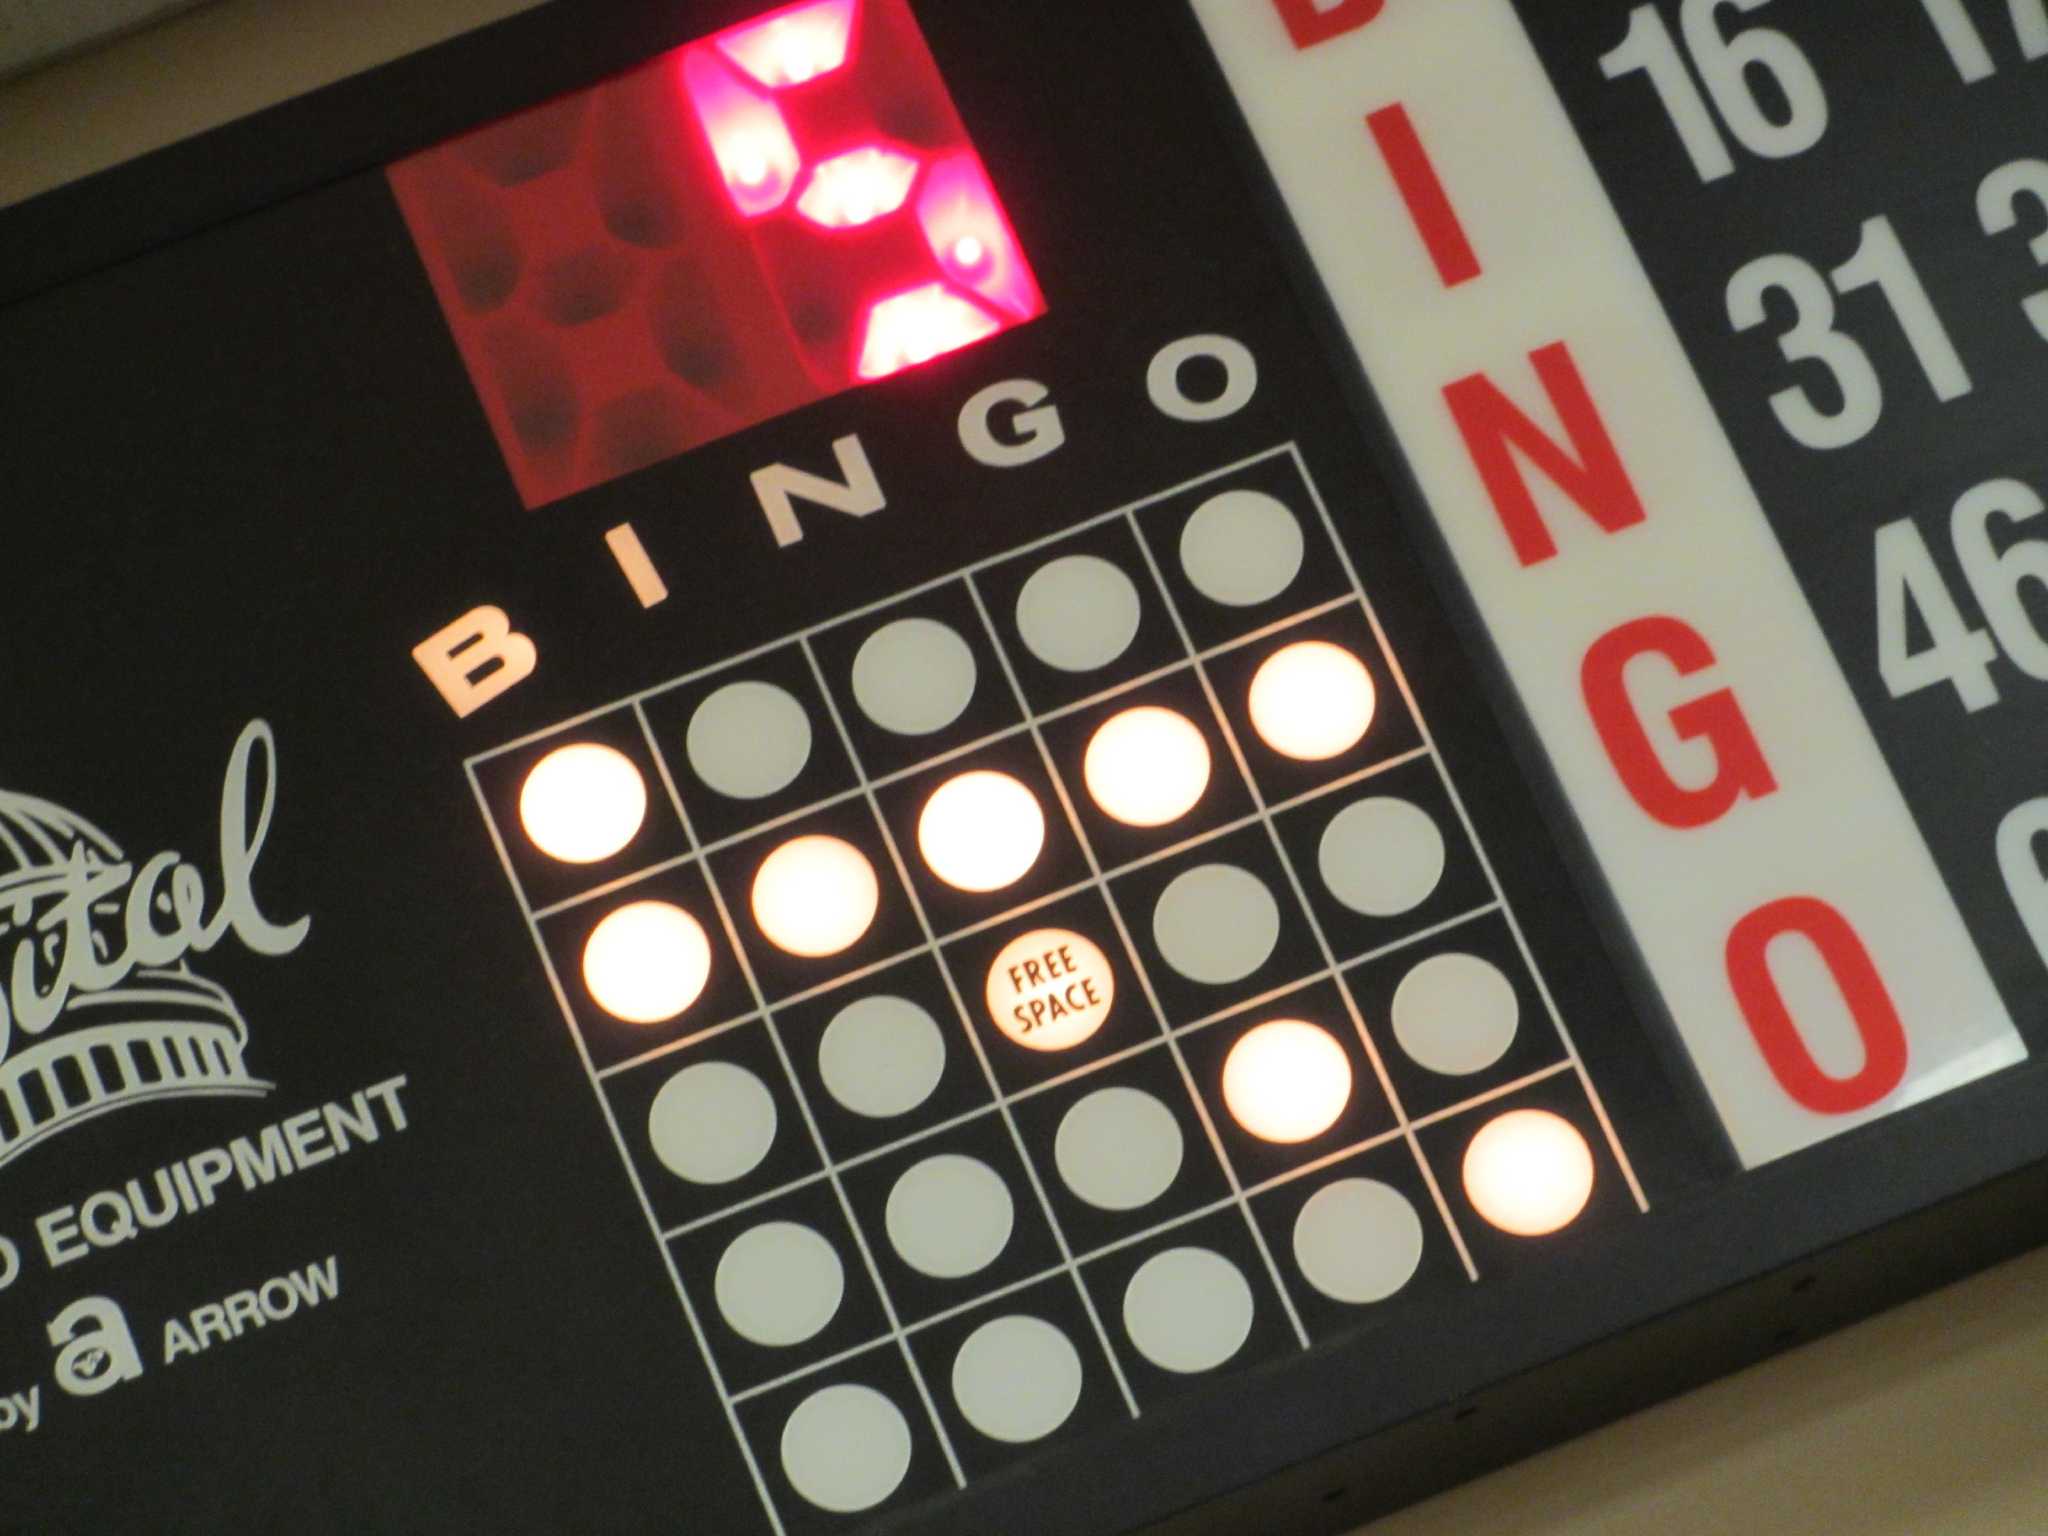 Kickapoo lucky eagle casino bingo